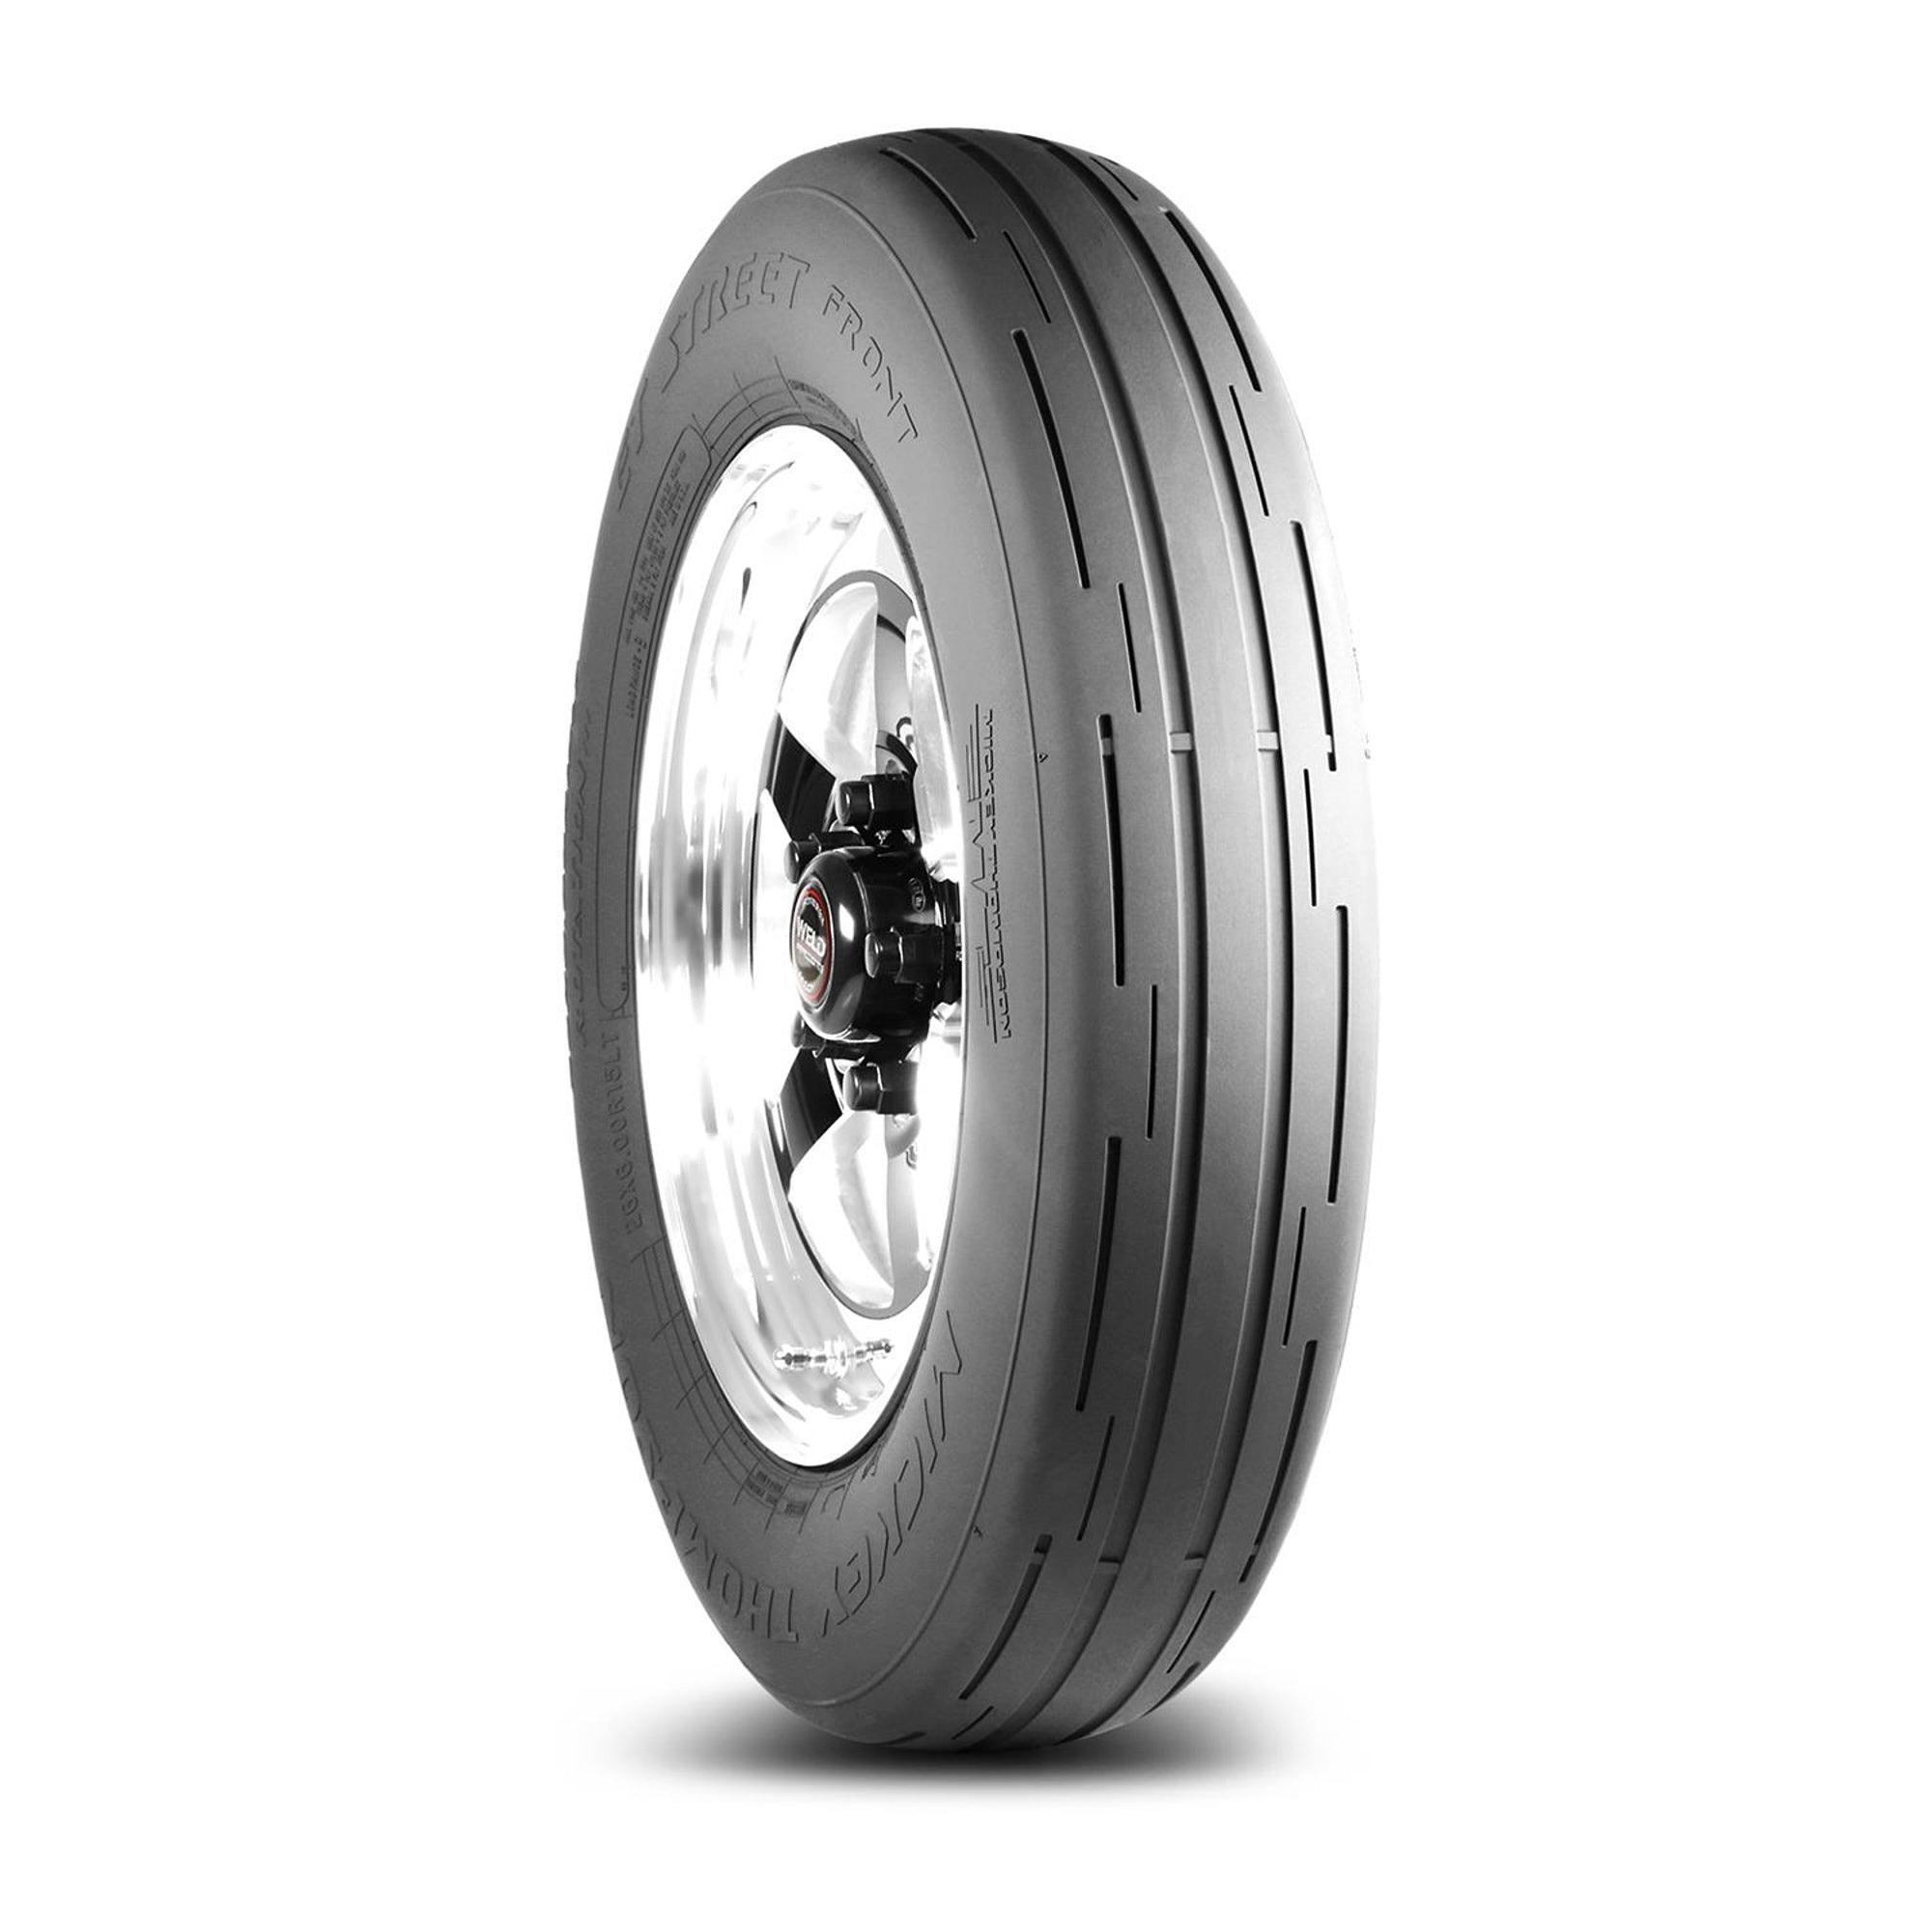 ET Sreet Radial Front Tire 27x6.00R15LT - Burlile Performance Products